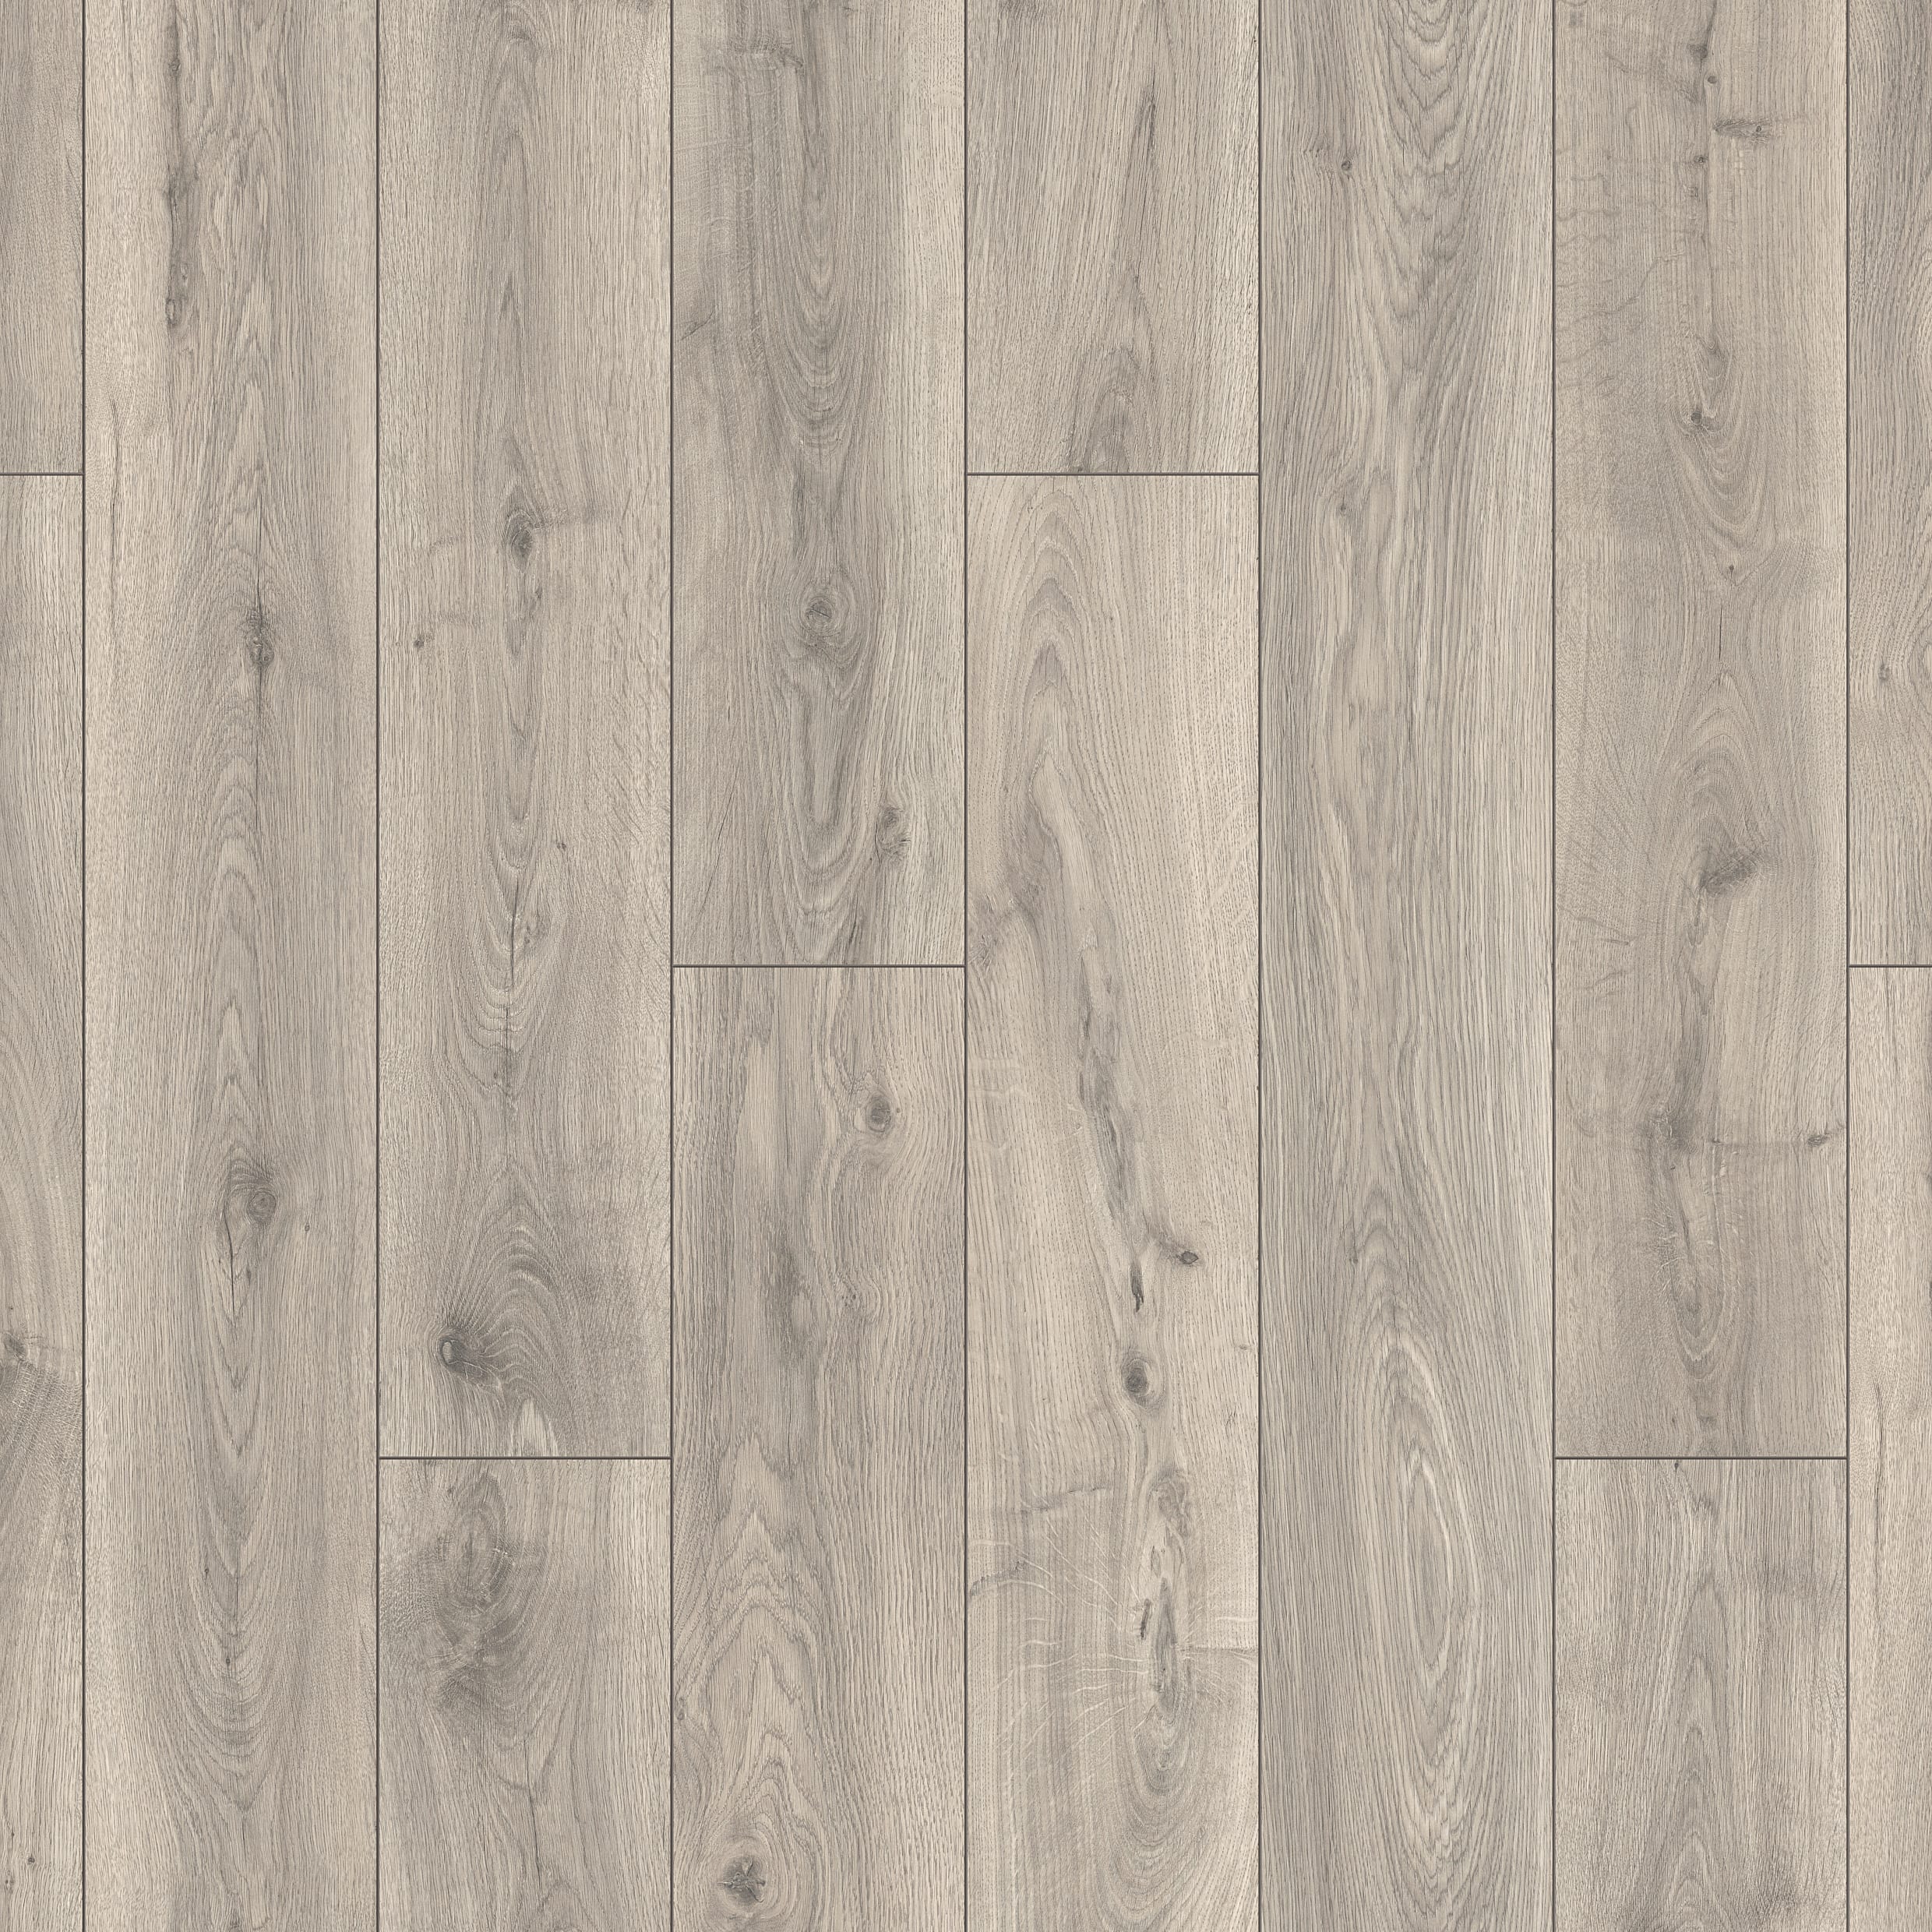 Atlantic Silverdale Oak 8mm Moisture Resistant Laminate Flooring